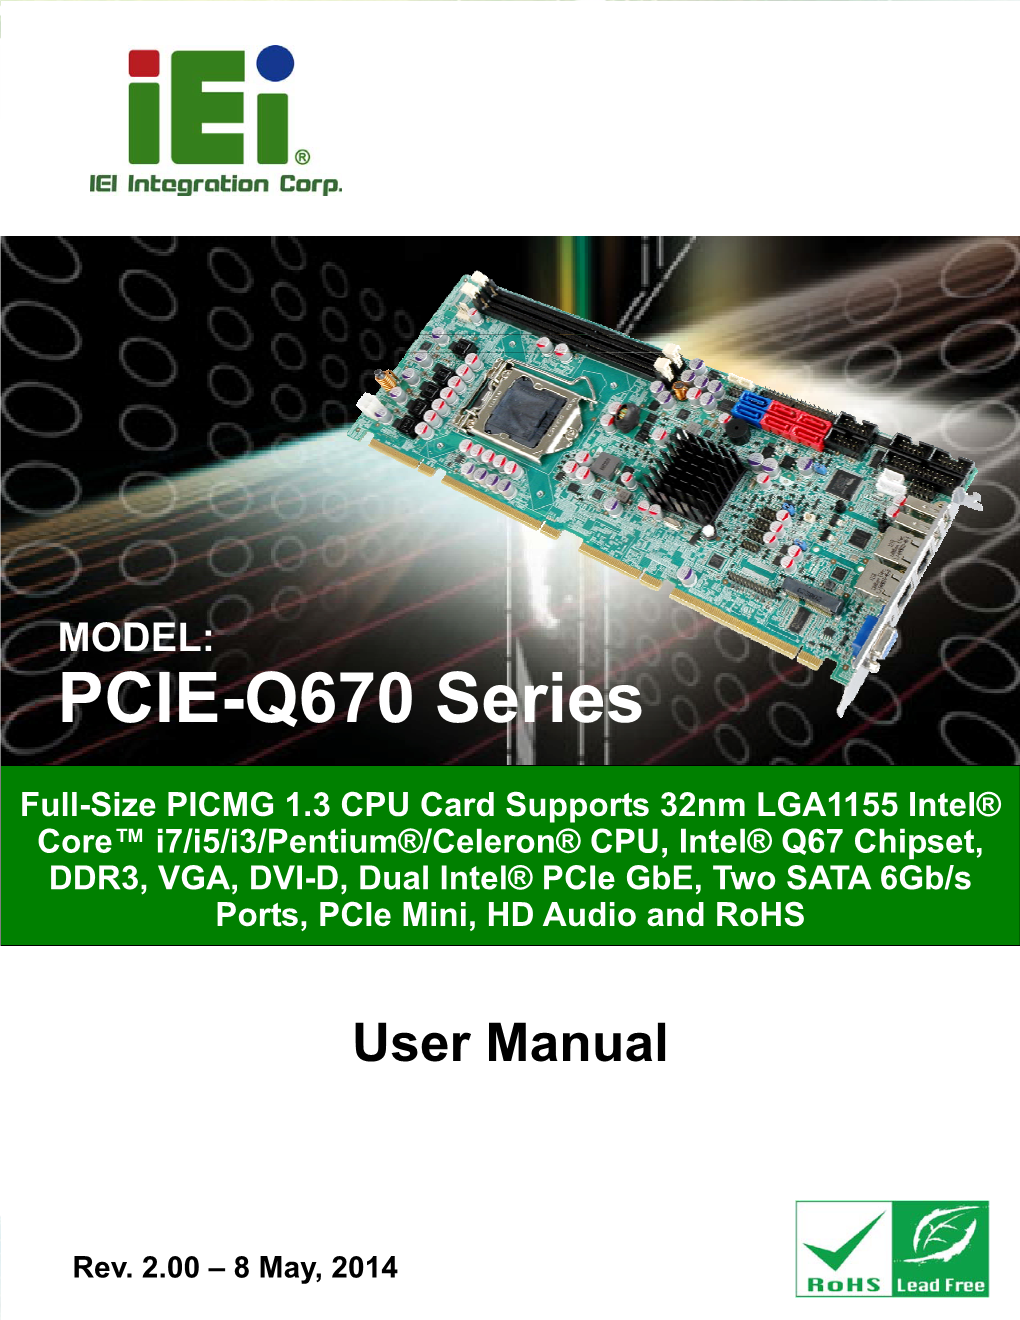 PCIE-Q670 PICMG 1.3 CPU Card